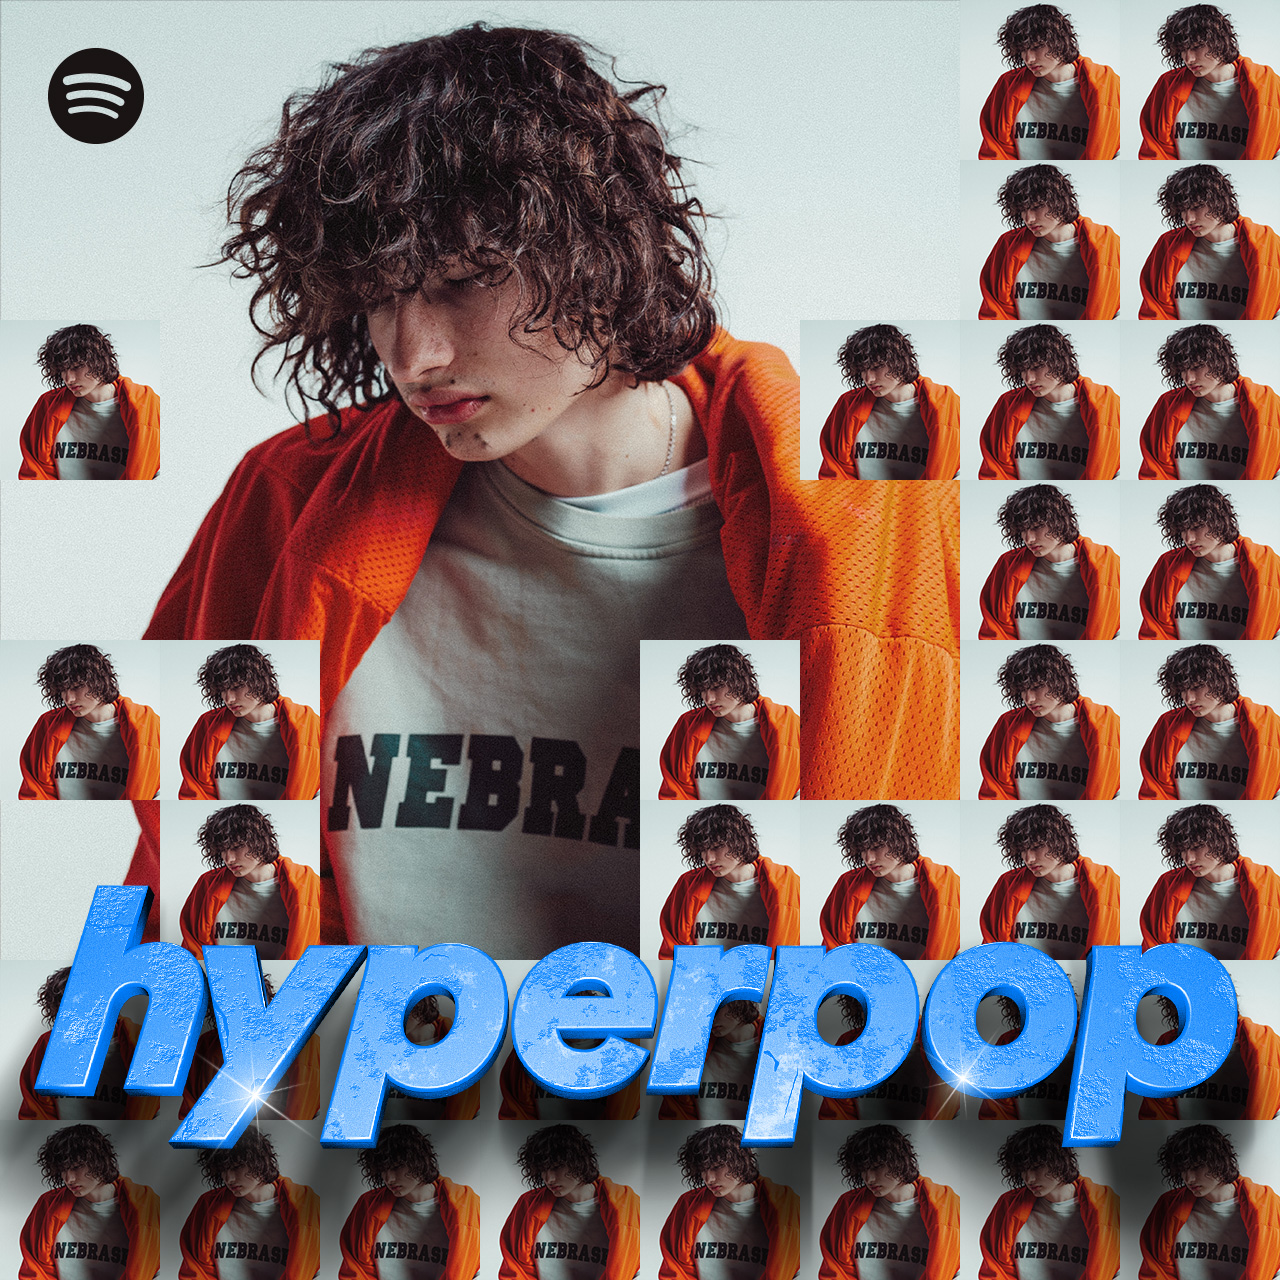 Spotify hyperpop by Erik Herrström on Dribbble